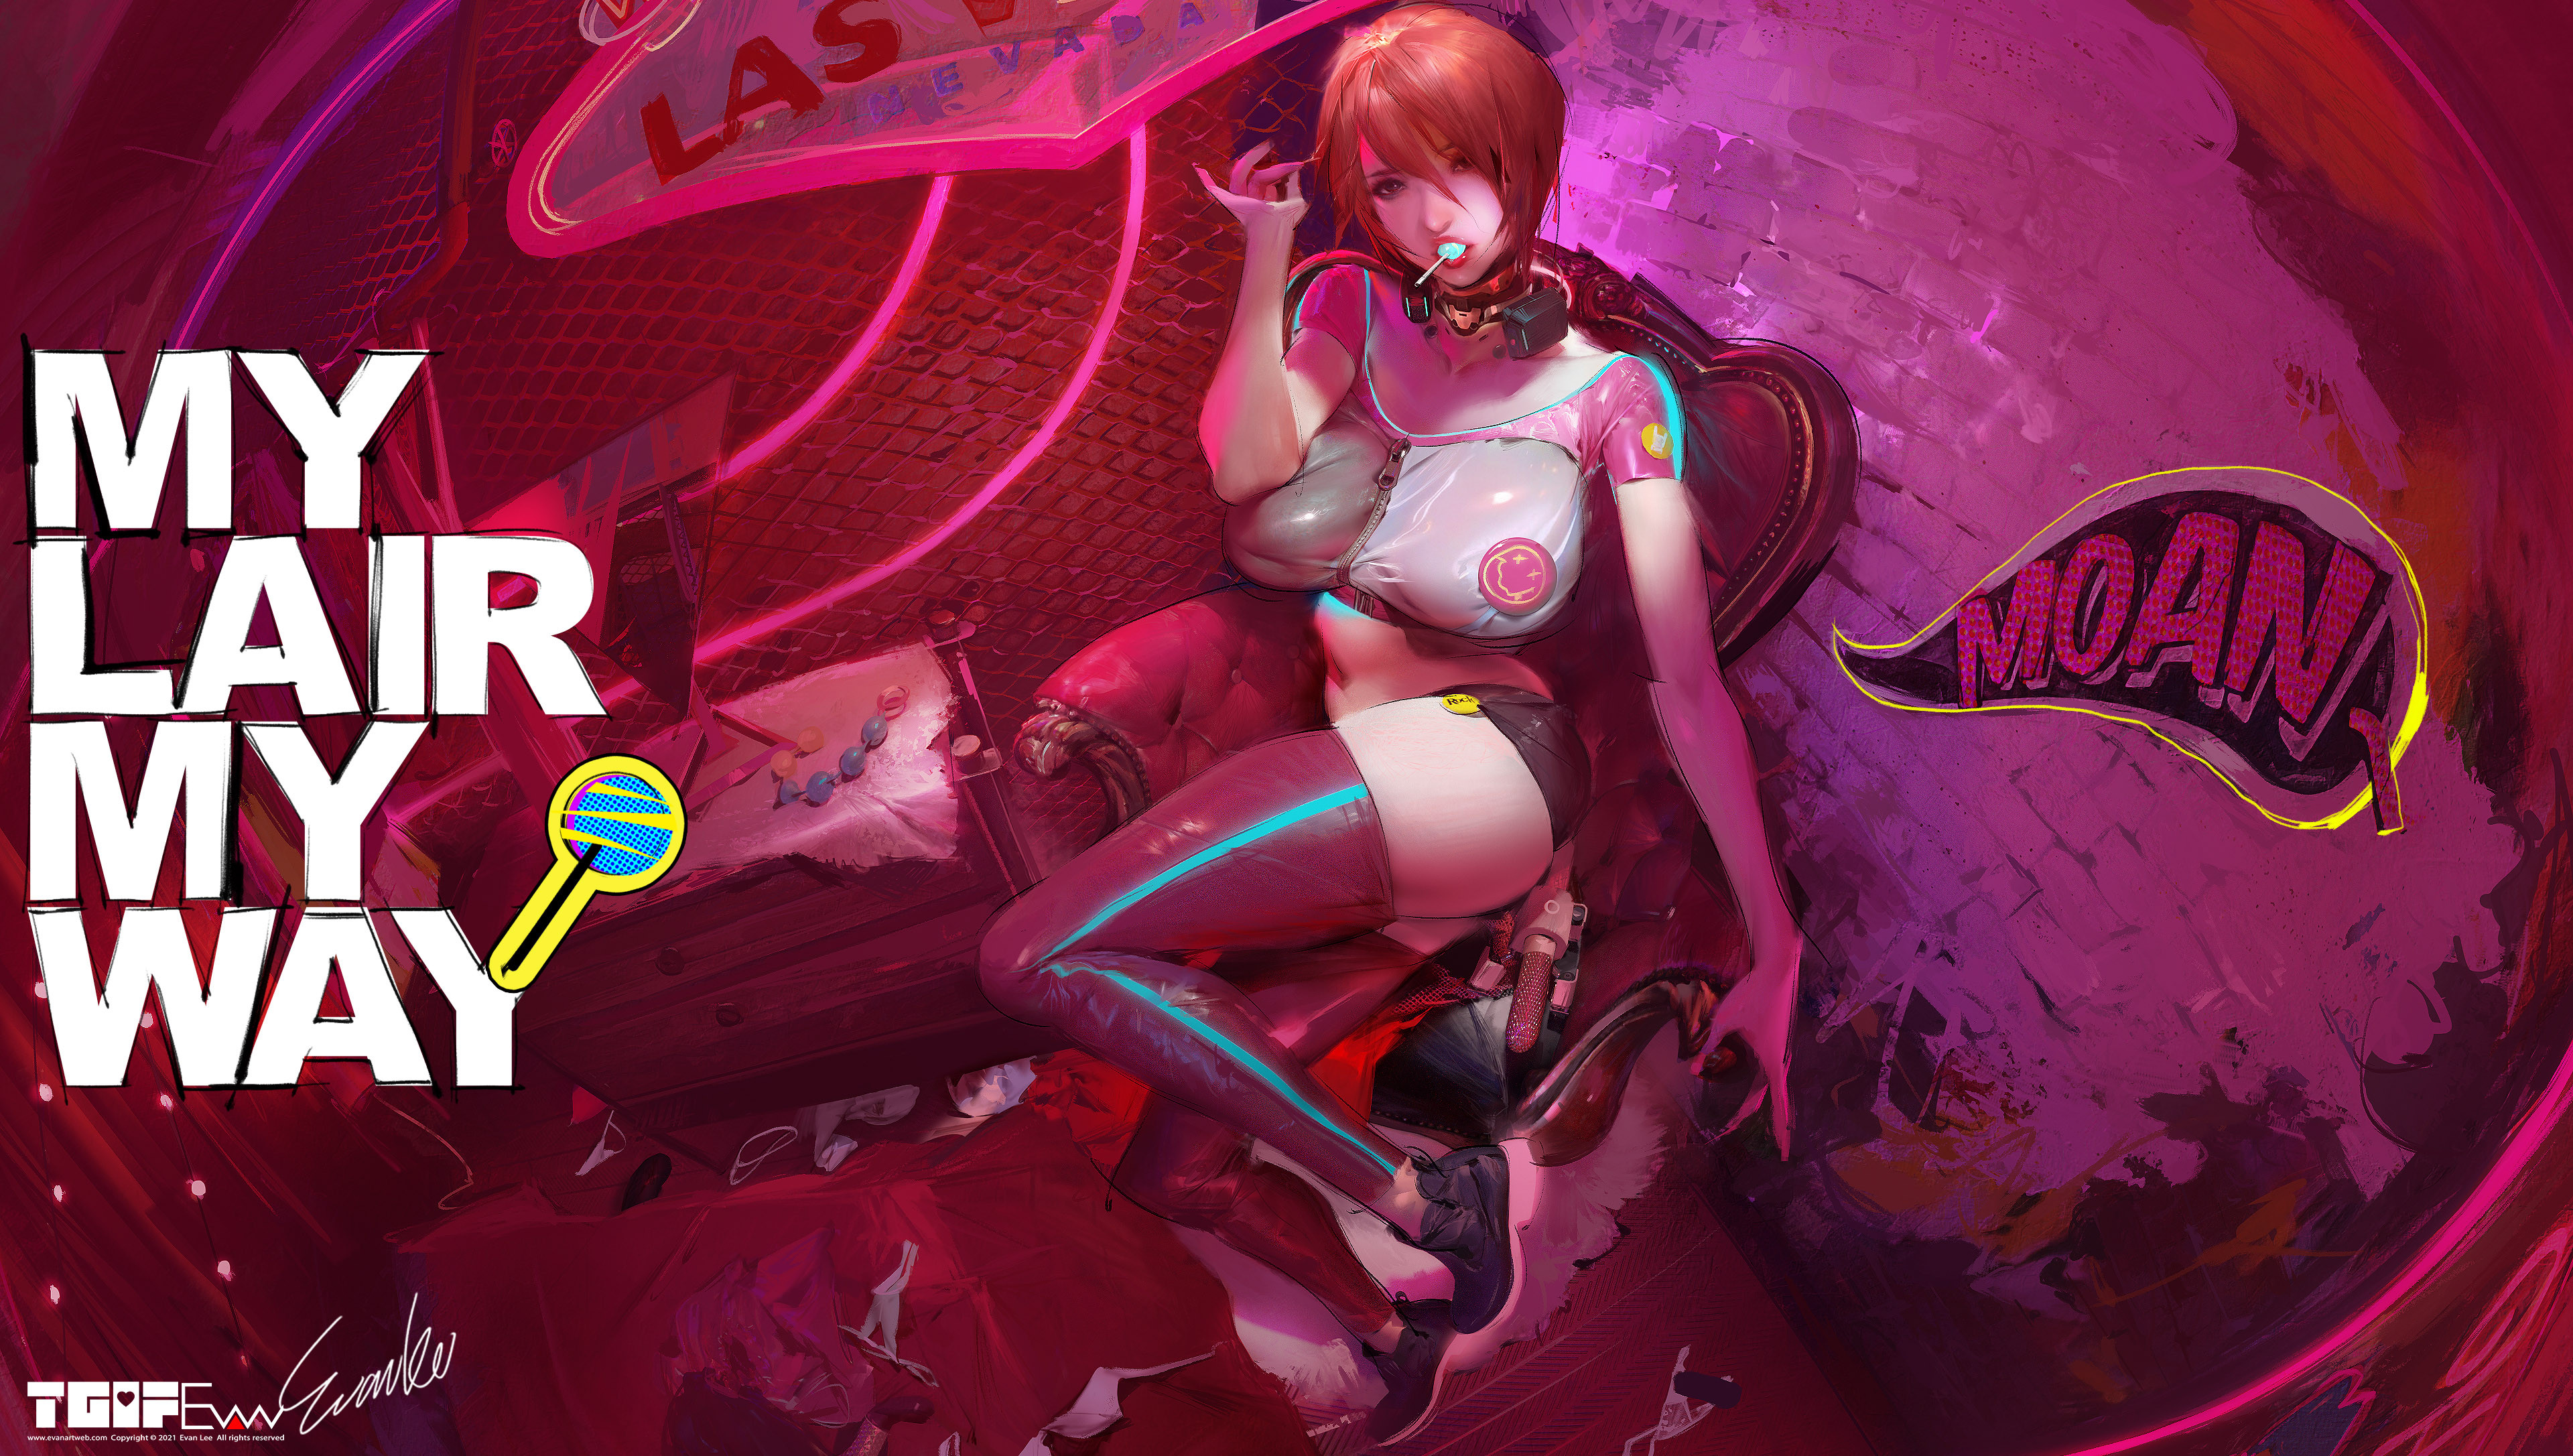 Anime 3840x2173 Evan Lee cyberpunk women artwork redhead Asian food sweets lollipop boobs big boobs stockings hair in face curvy 2021 (year)